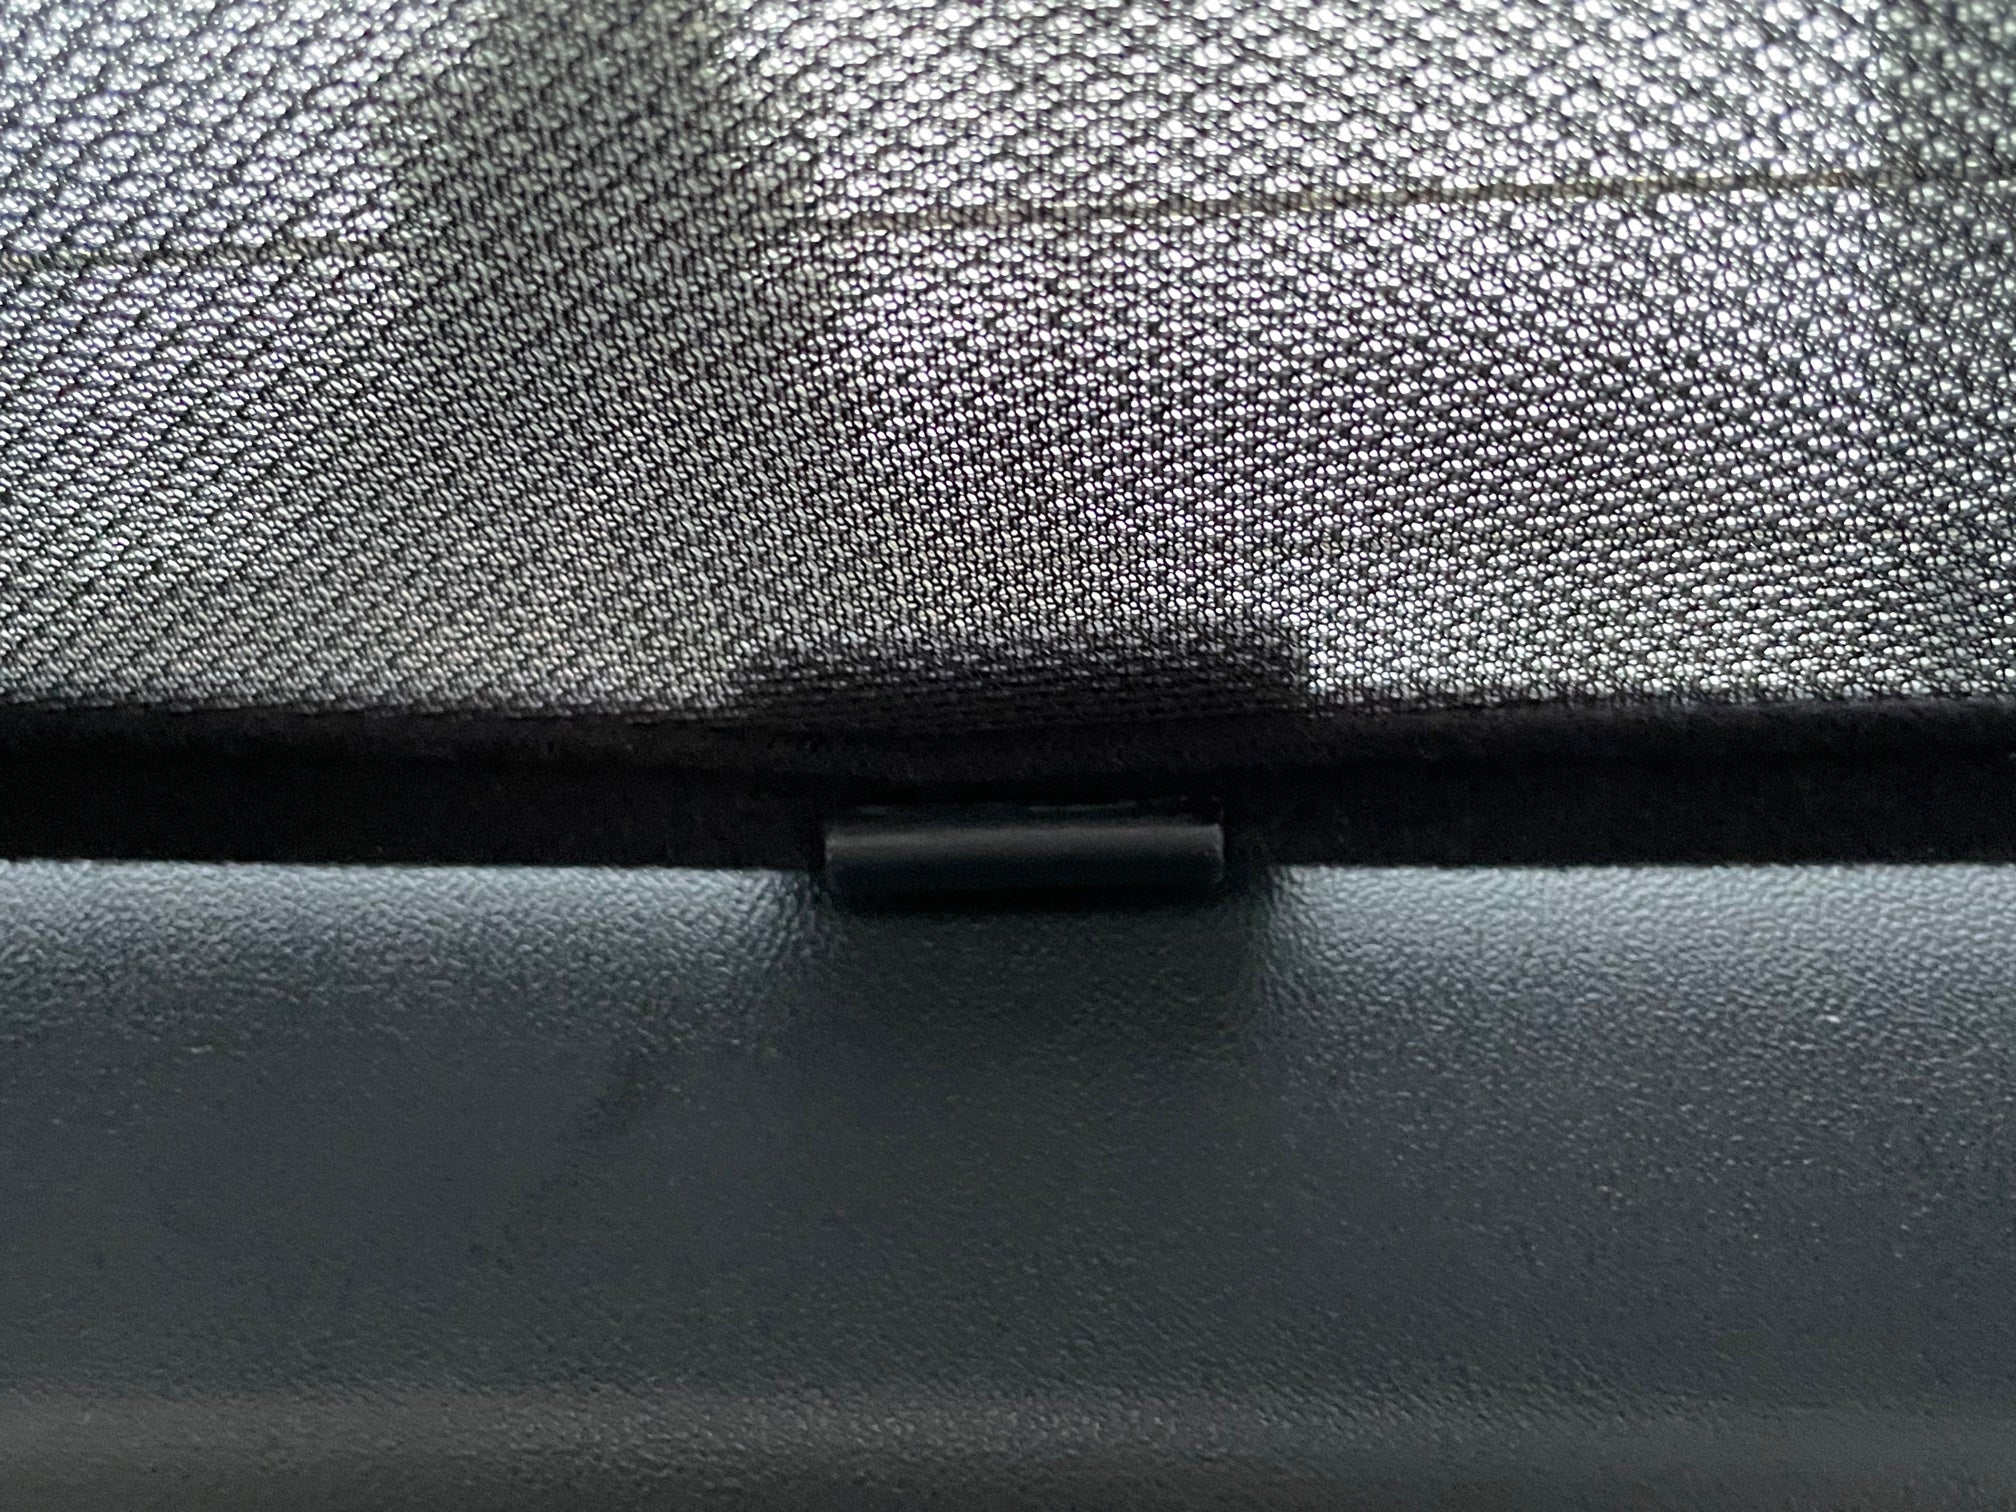 Sun protection element rear window Tesla Model S – E-Mobility Shop